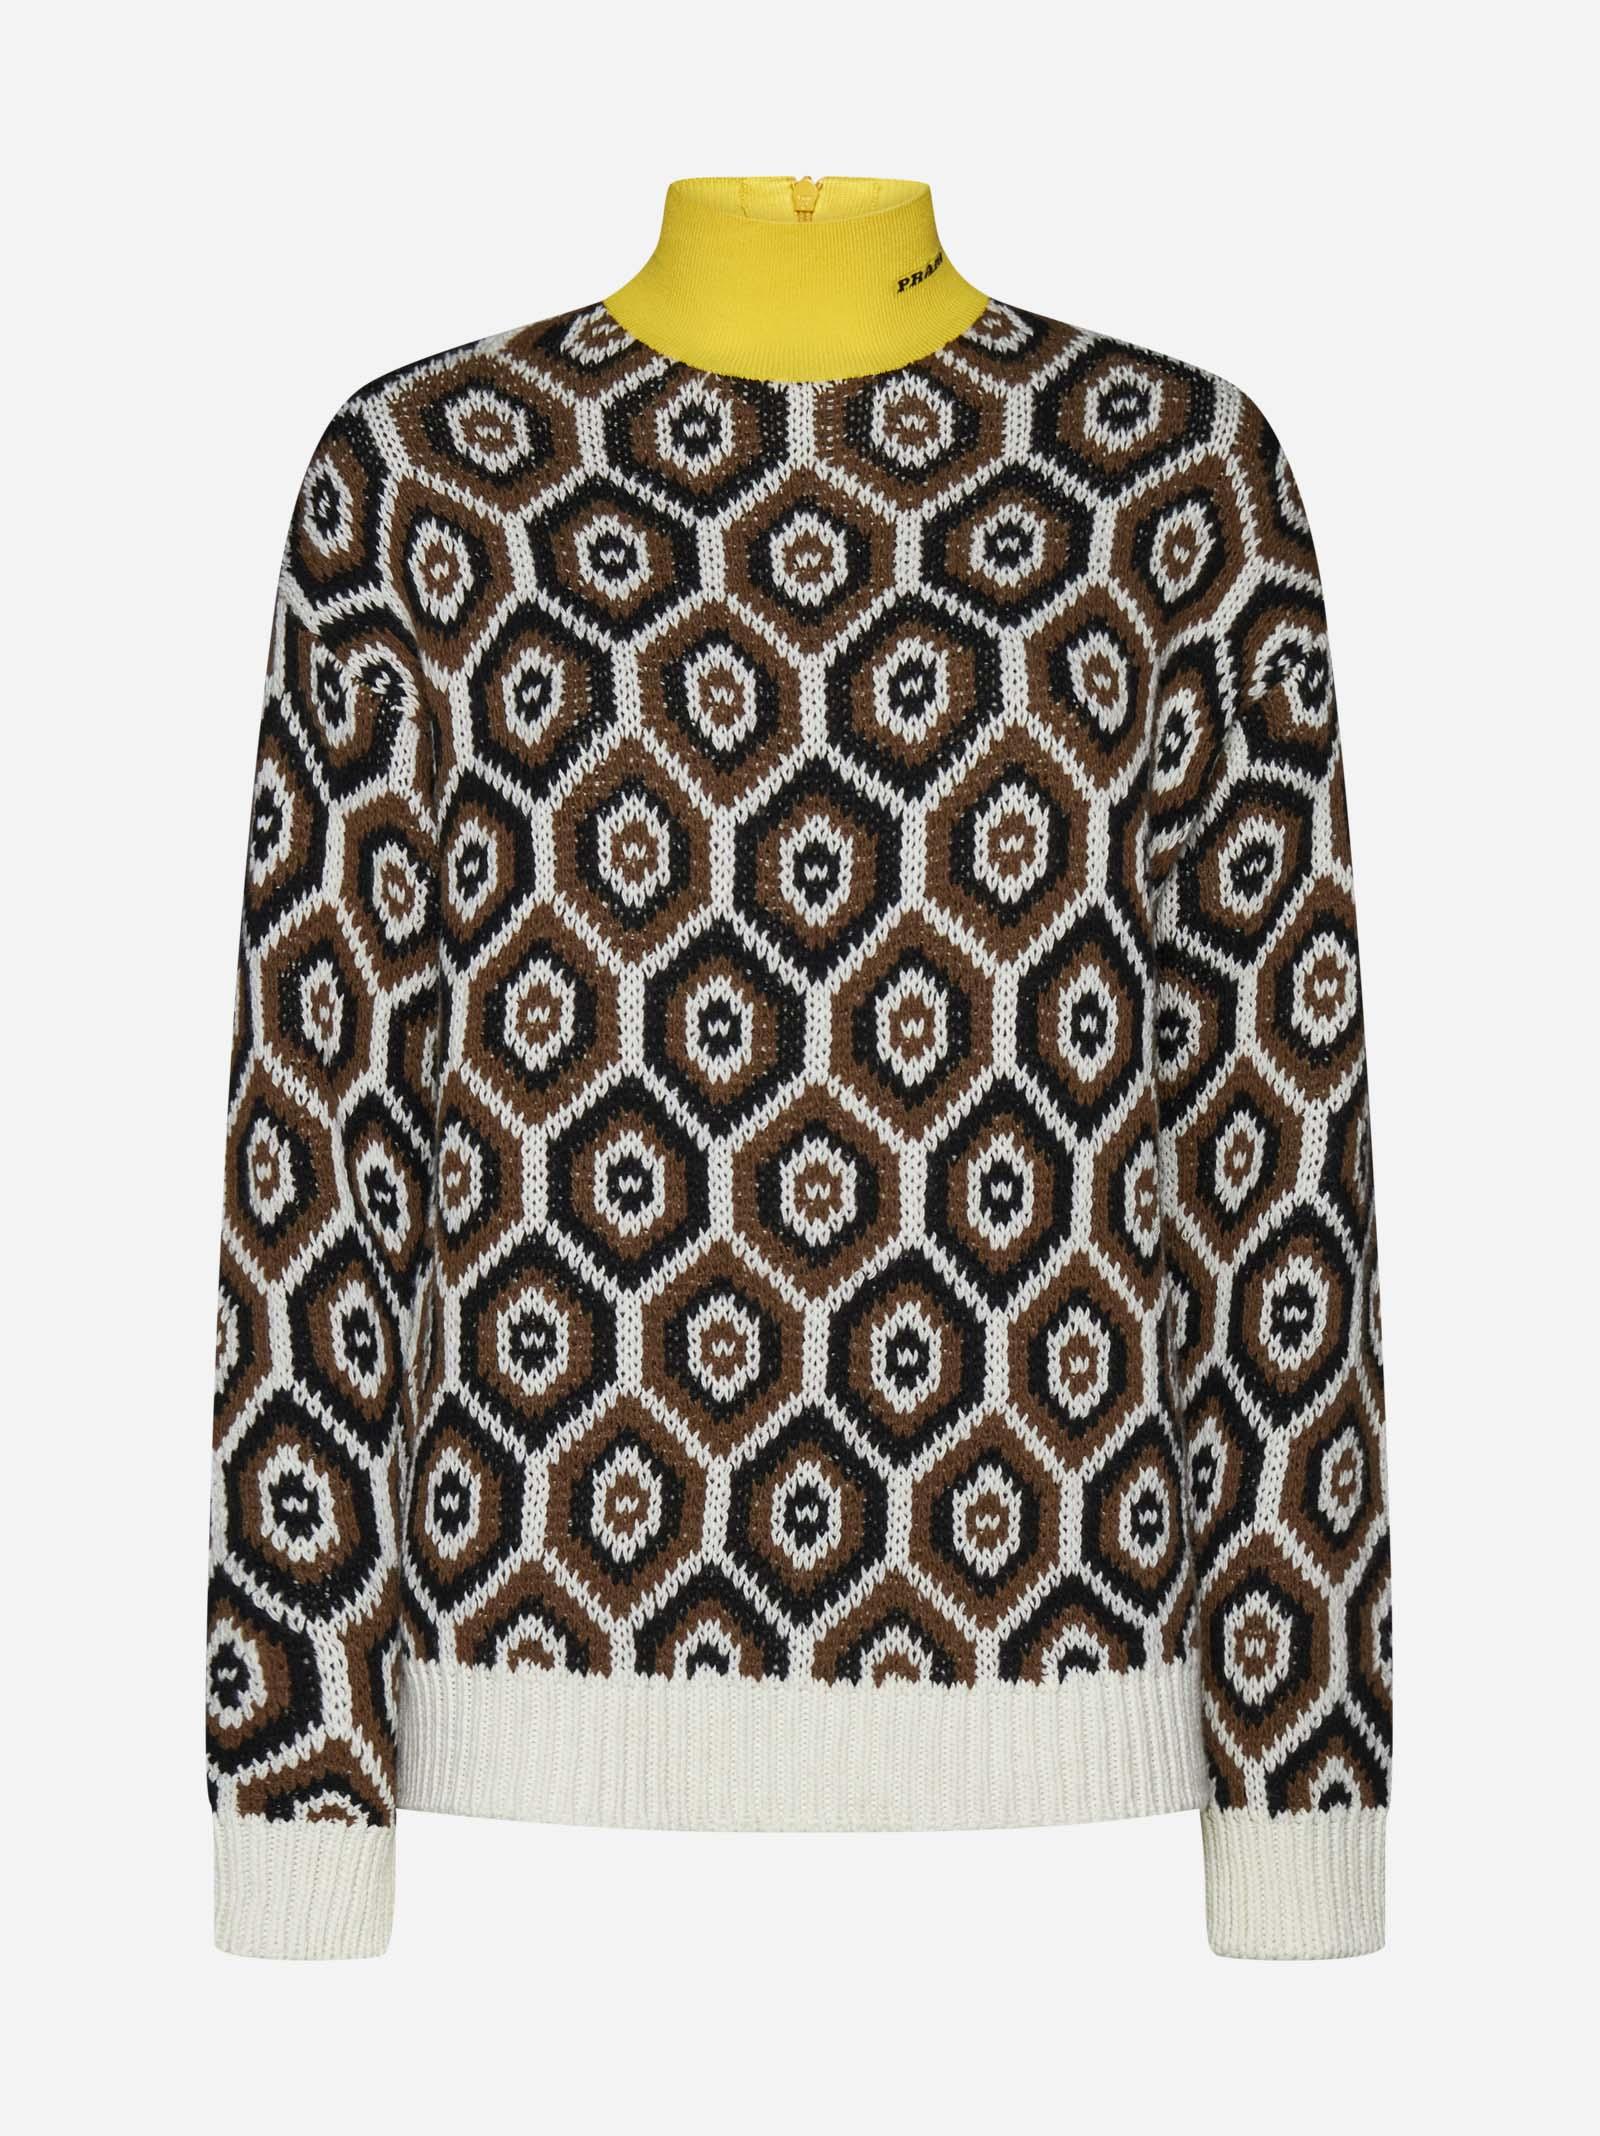 Prada Jacquard Wool Blend Sweater